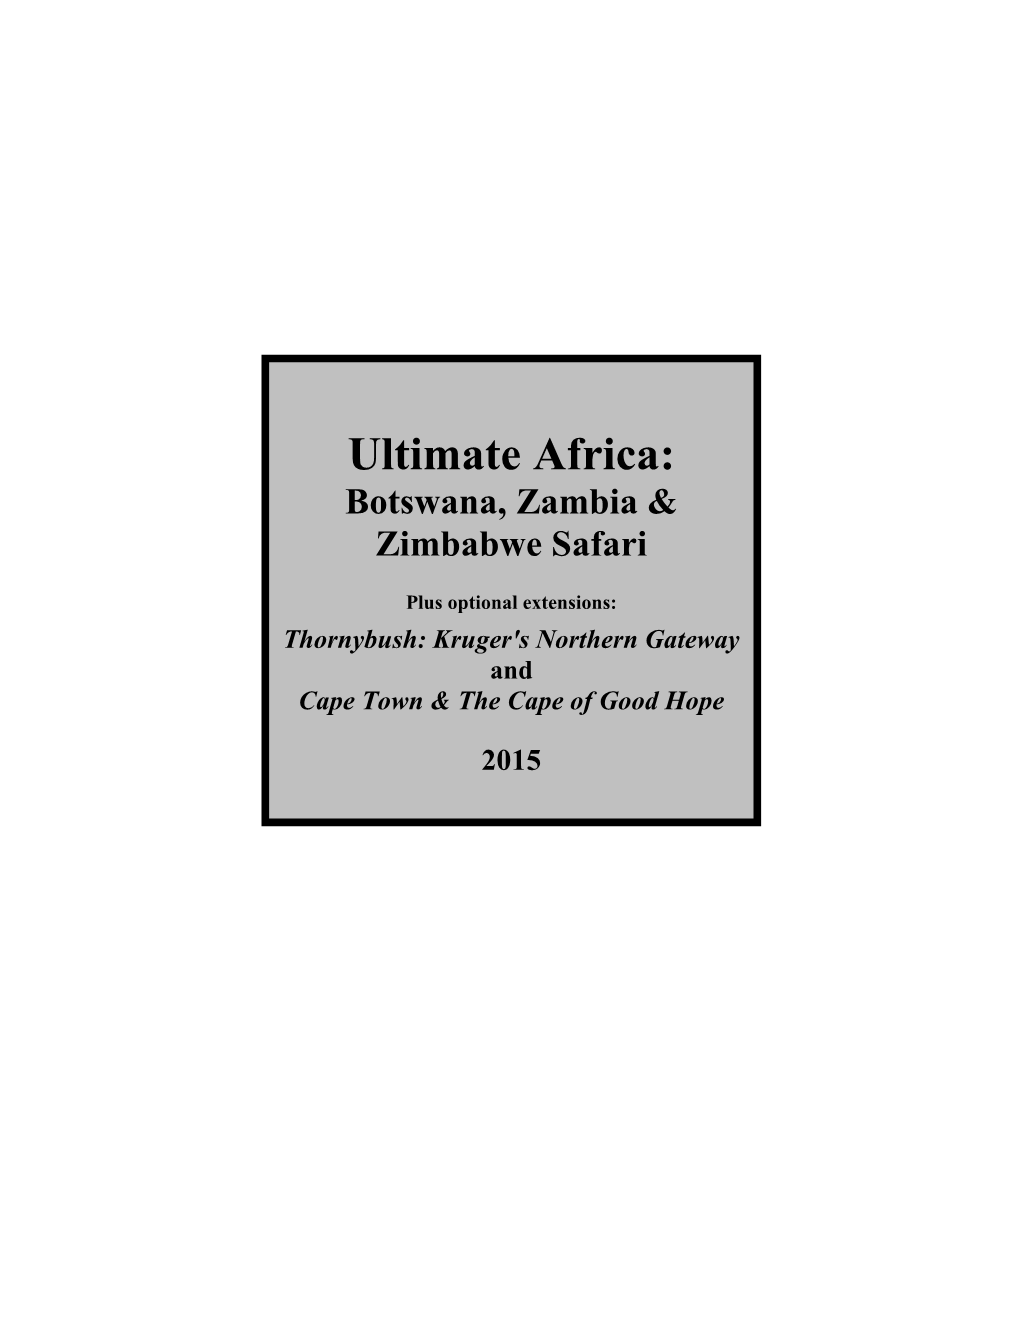 Ultimate Africa: Botswana, Zambia & Zimbabwe Safari